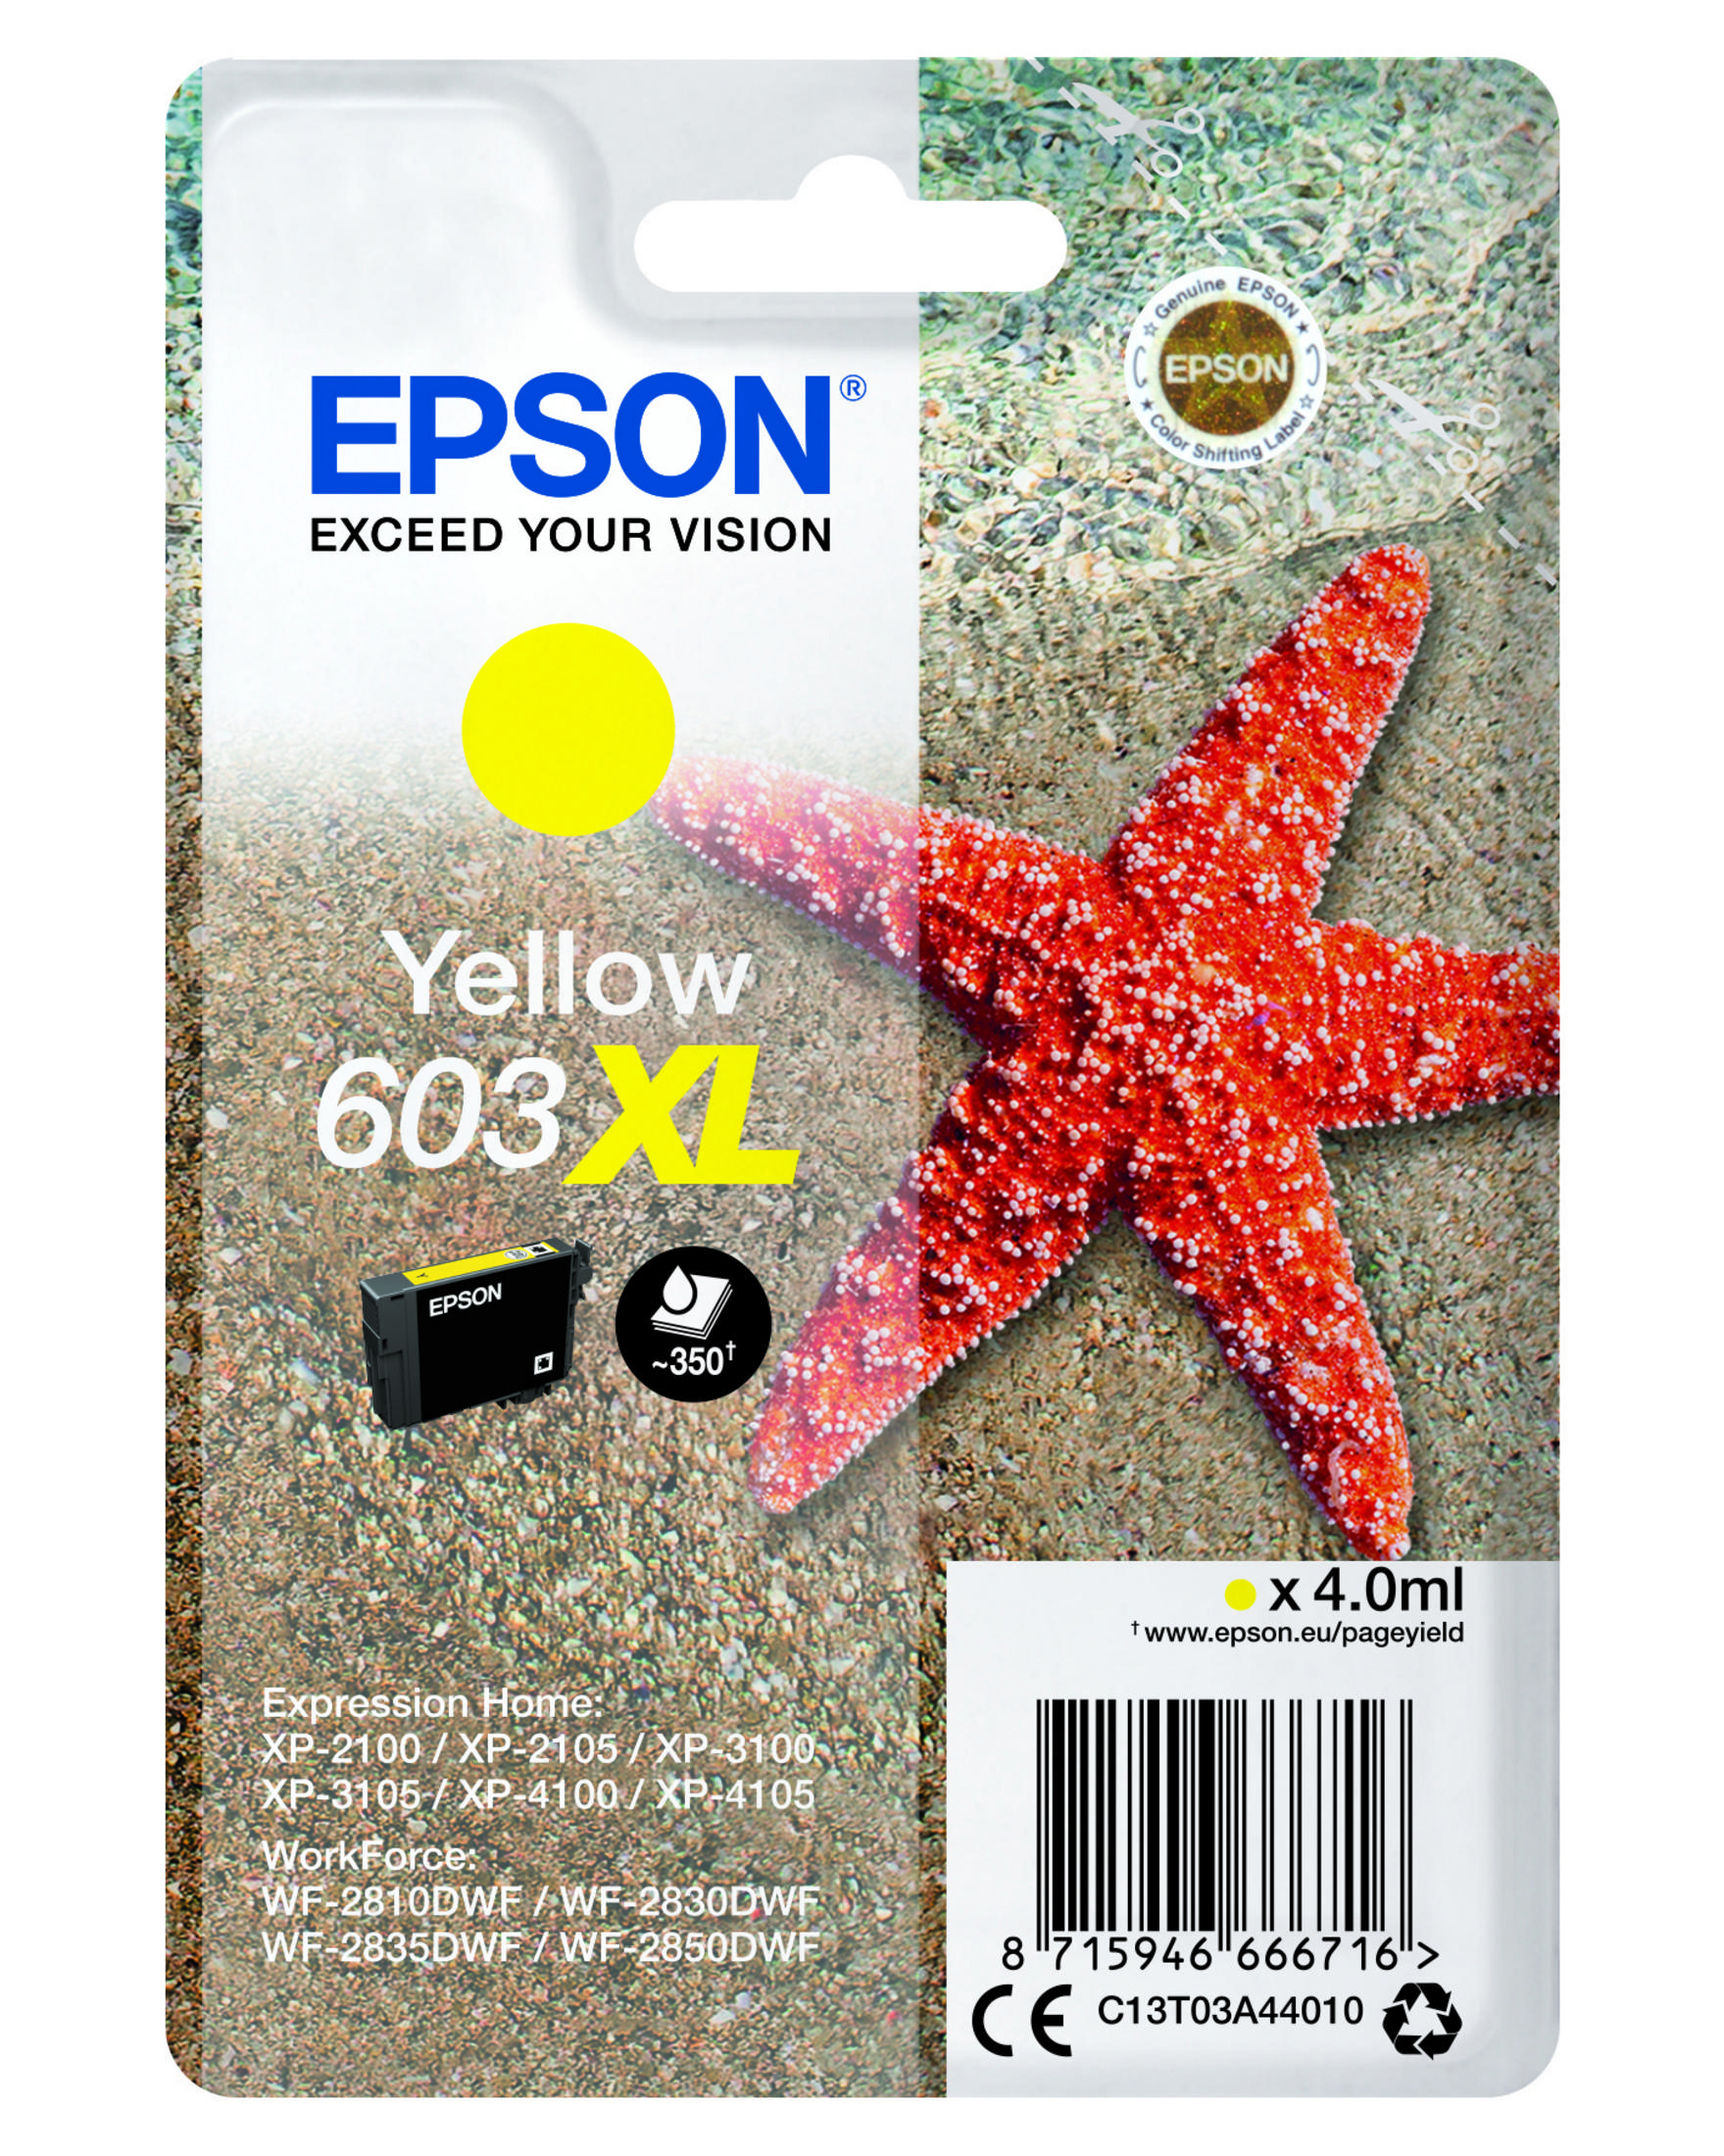 EPSON 603XL Tinte (C13T03A440) yellow